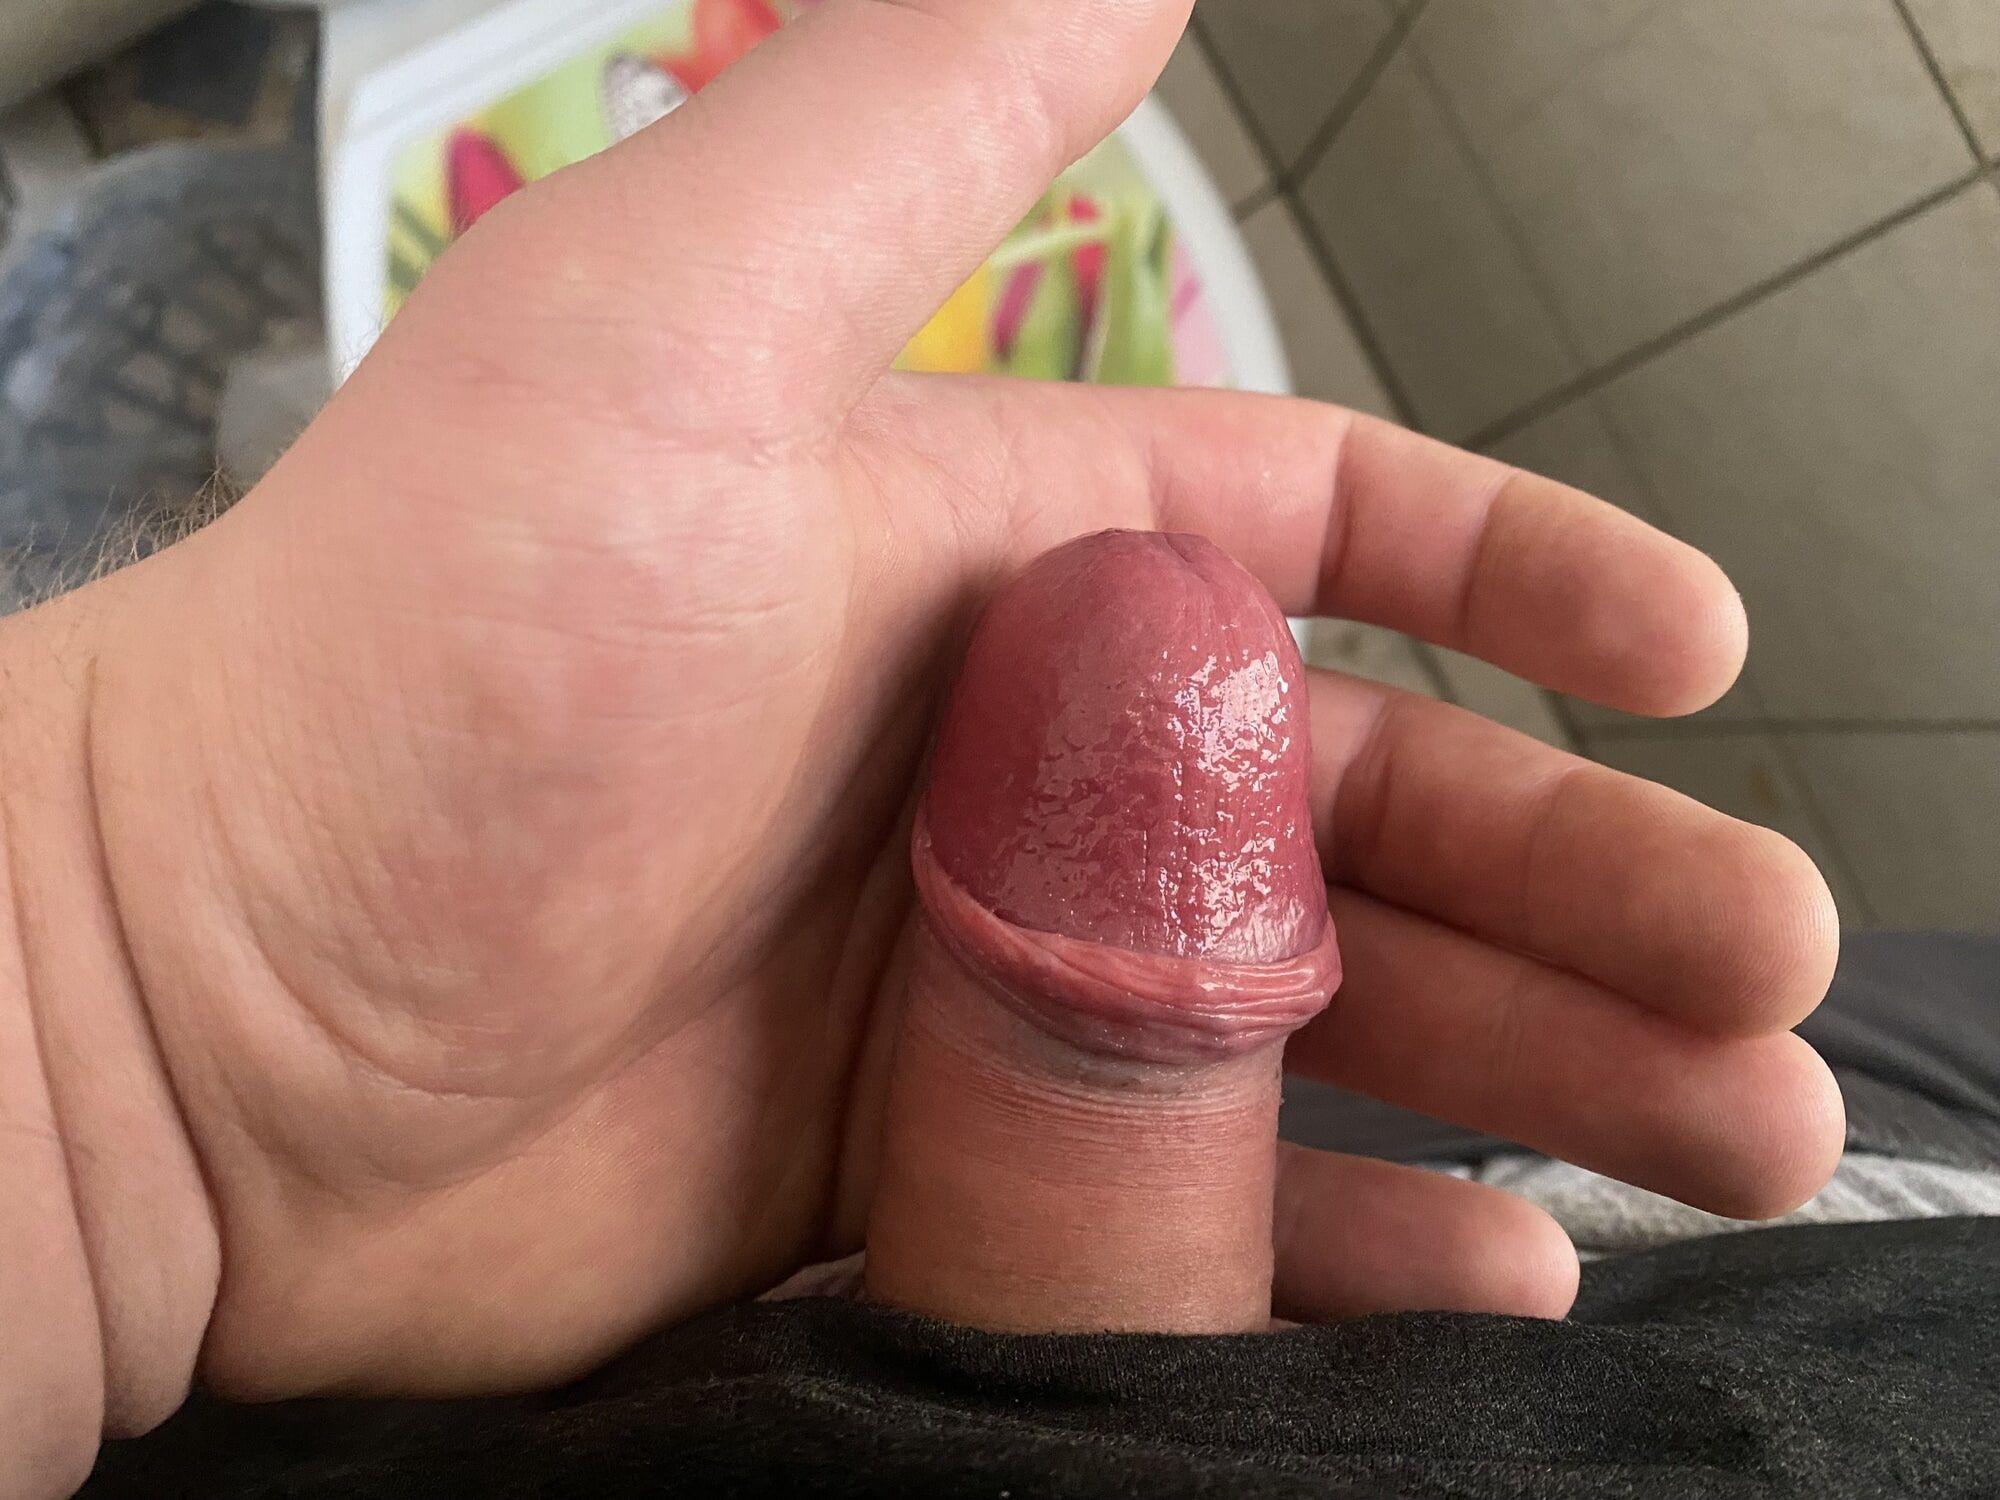 My little penis #2